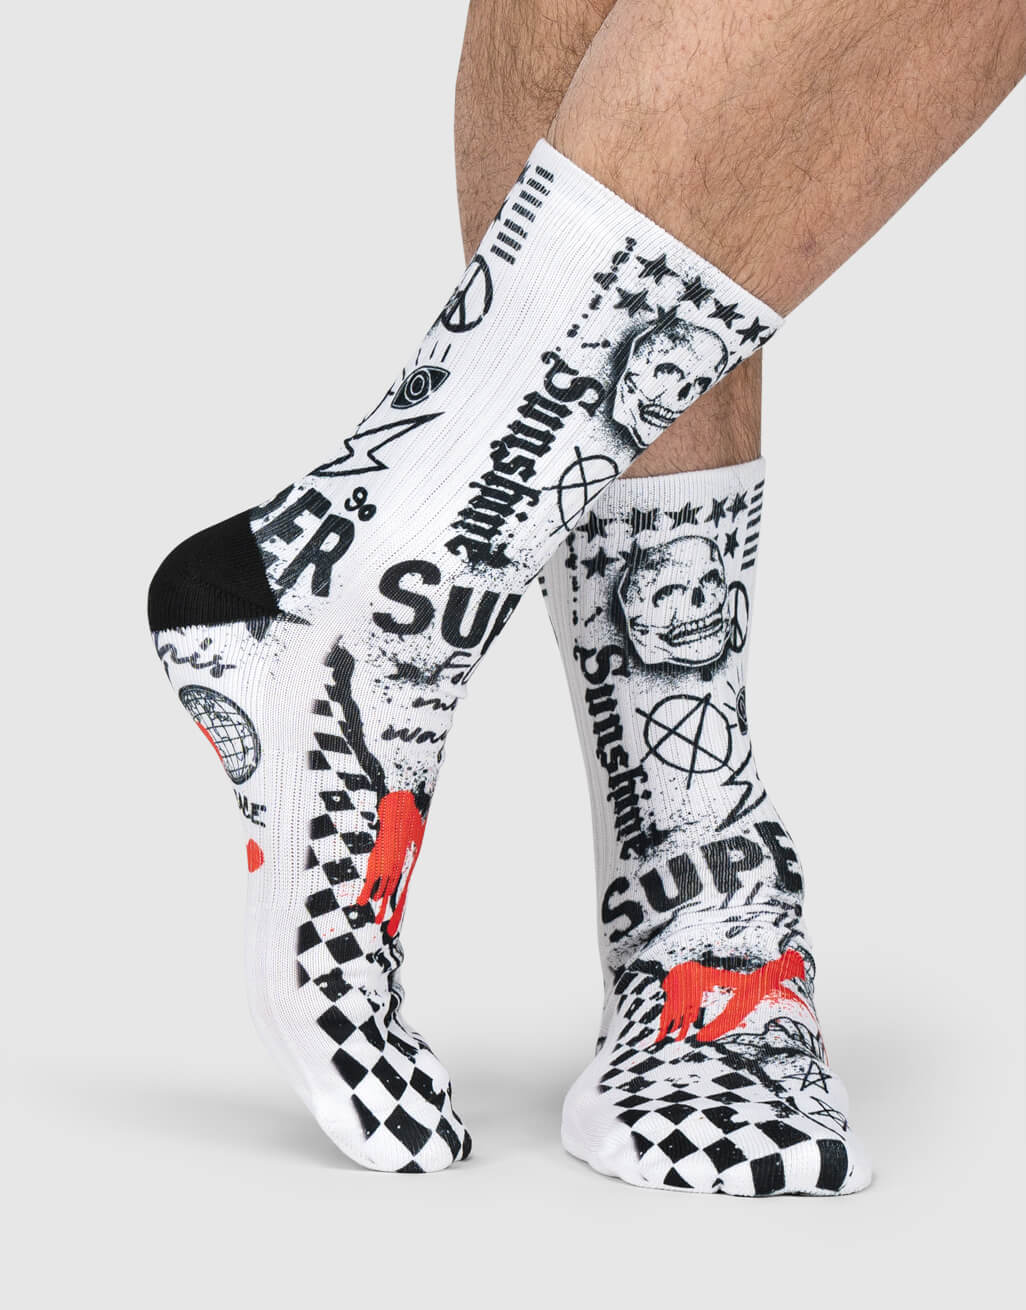 grungey-doodle-socks